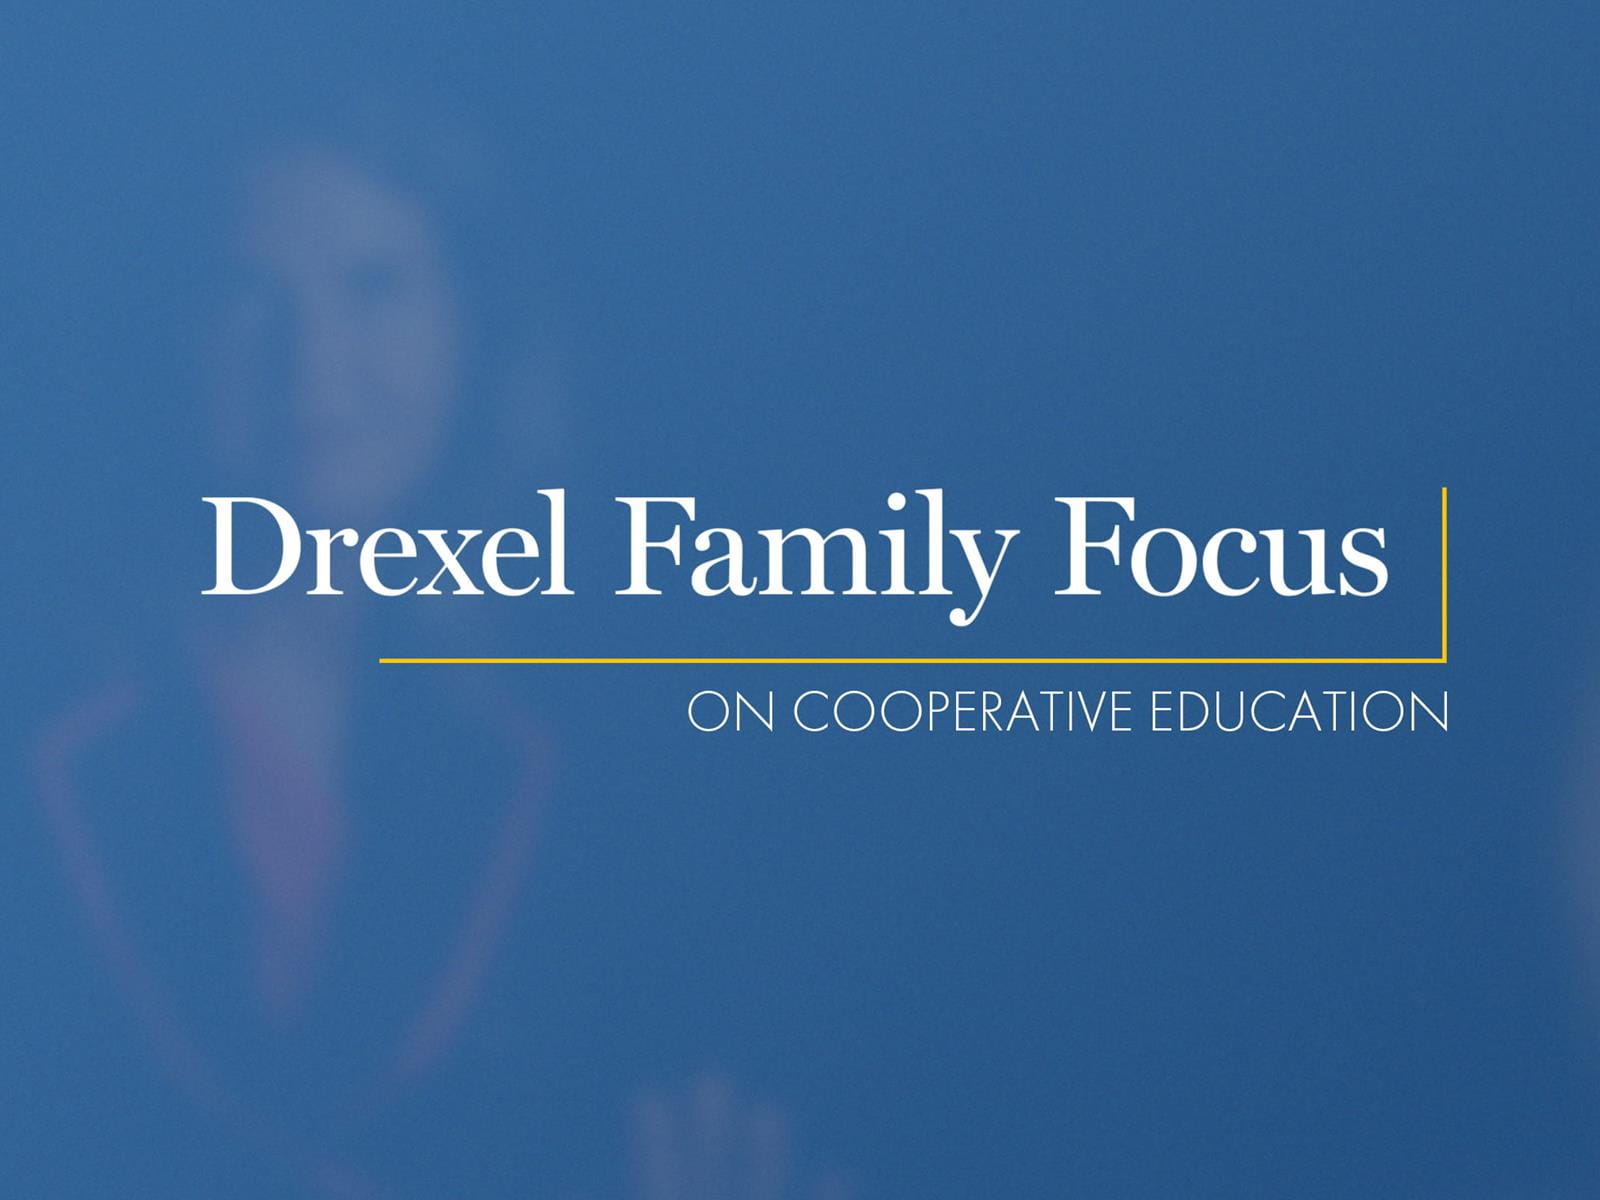 Drexel Family Focus: On Cooperative Education